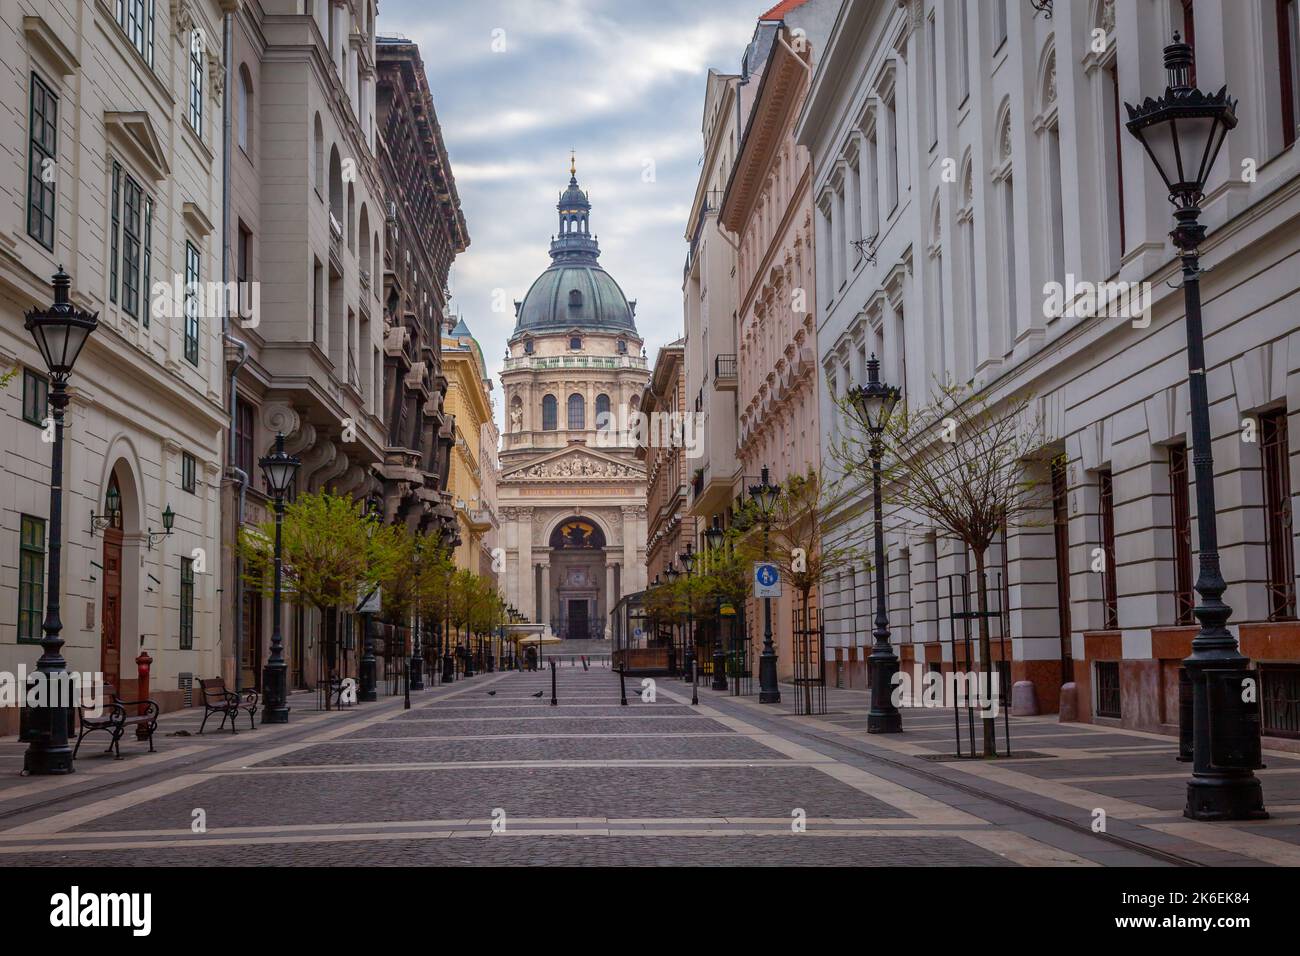 Zrinyi utca street and Saint Stephens Basilica in central Budapest, Hungary Stock Photo